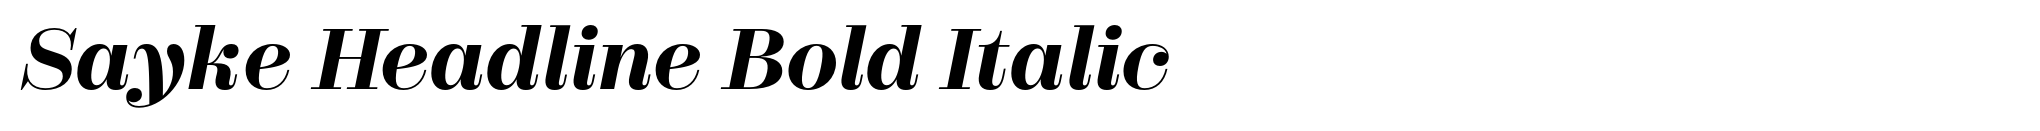 Sayke Headline Bold Italic image